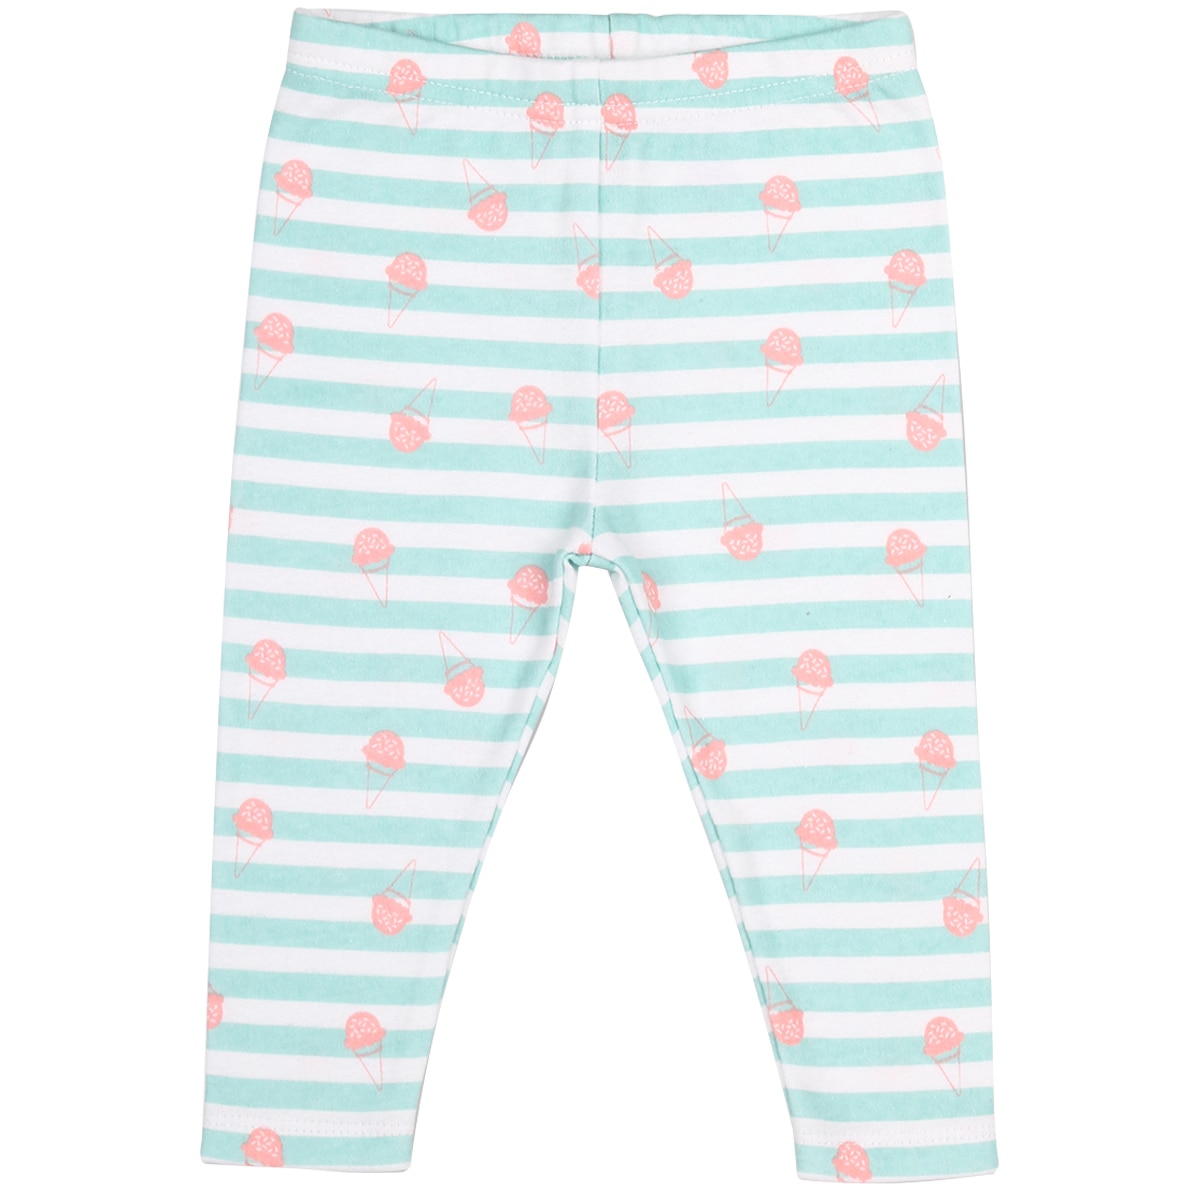 Peanut Shell 2pc Baby Set - Pink Hood/Print Pants